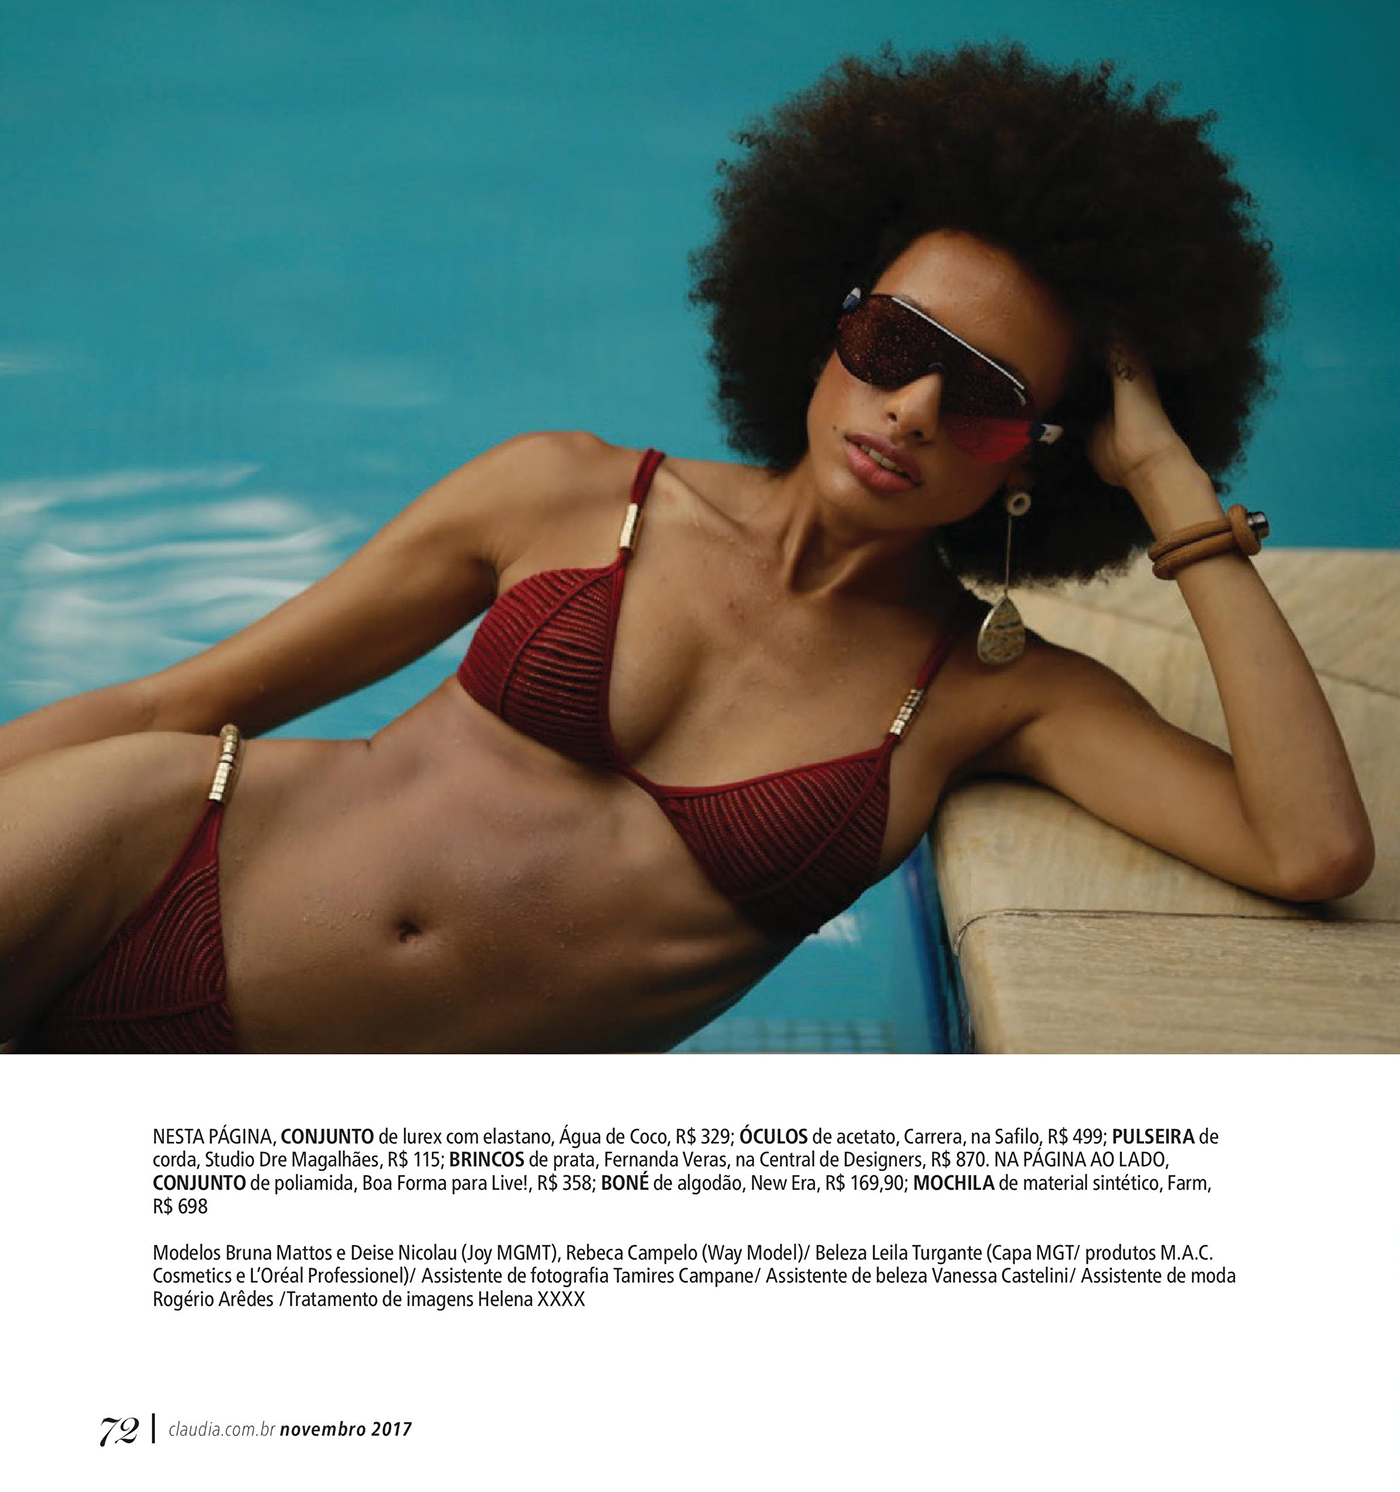 summer fashion bikinis models Pool Sunglasses art sculptures